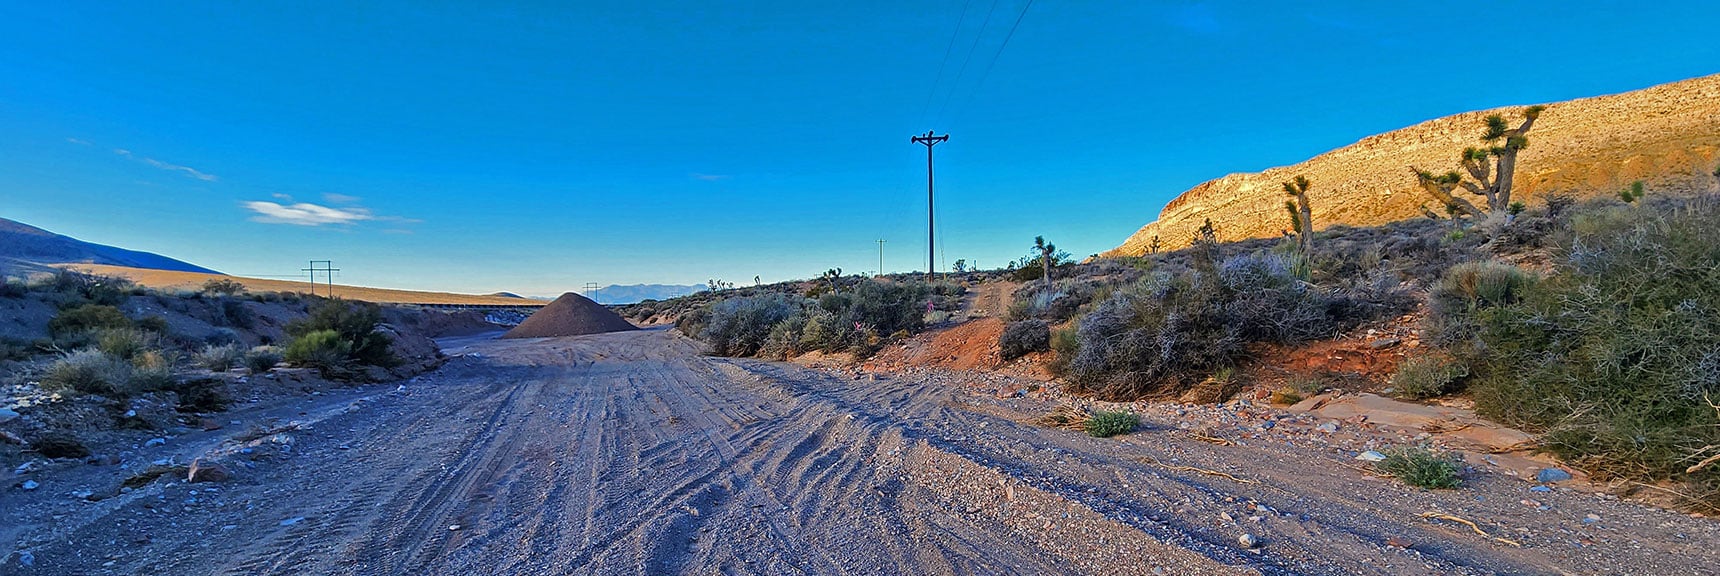 First Split Where Wash Road Meets Powerline Maintenance Road | Landmark Bluff Summit | Lovell Canyon, Nevada